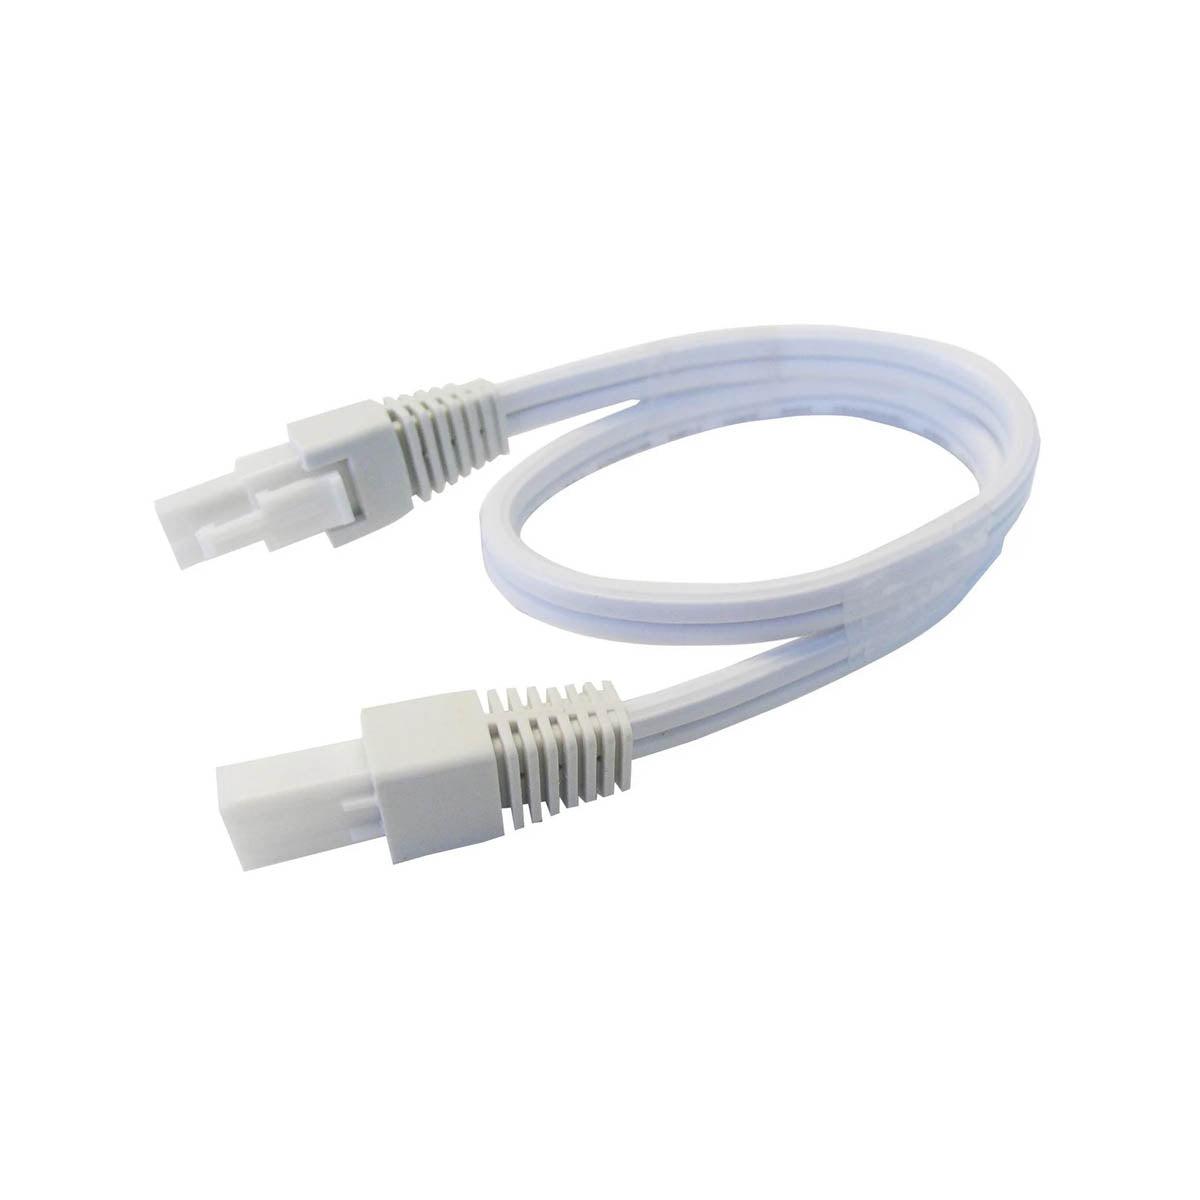 12in. Interconnect Cord for Elena Task Lighting, White